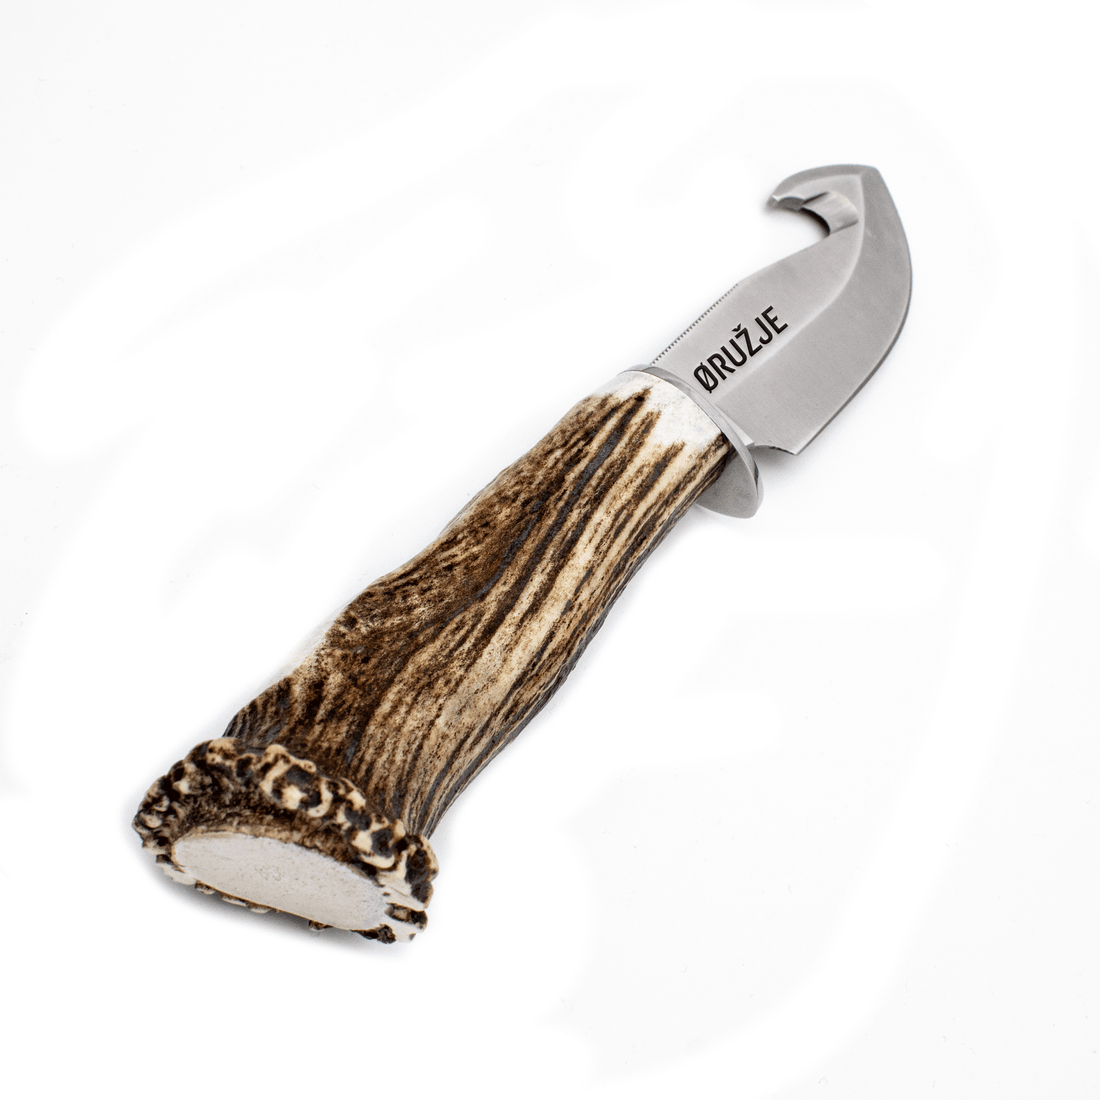 Lovački nož Muela Viper 11 S